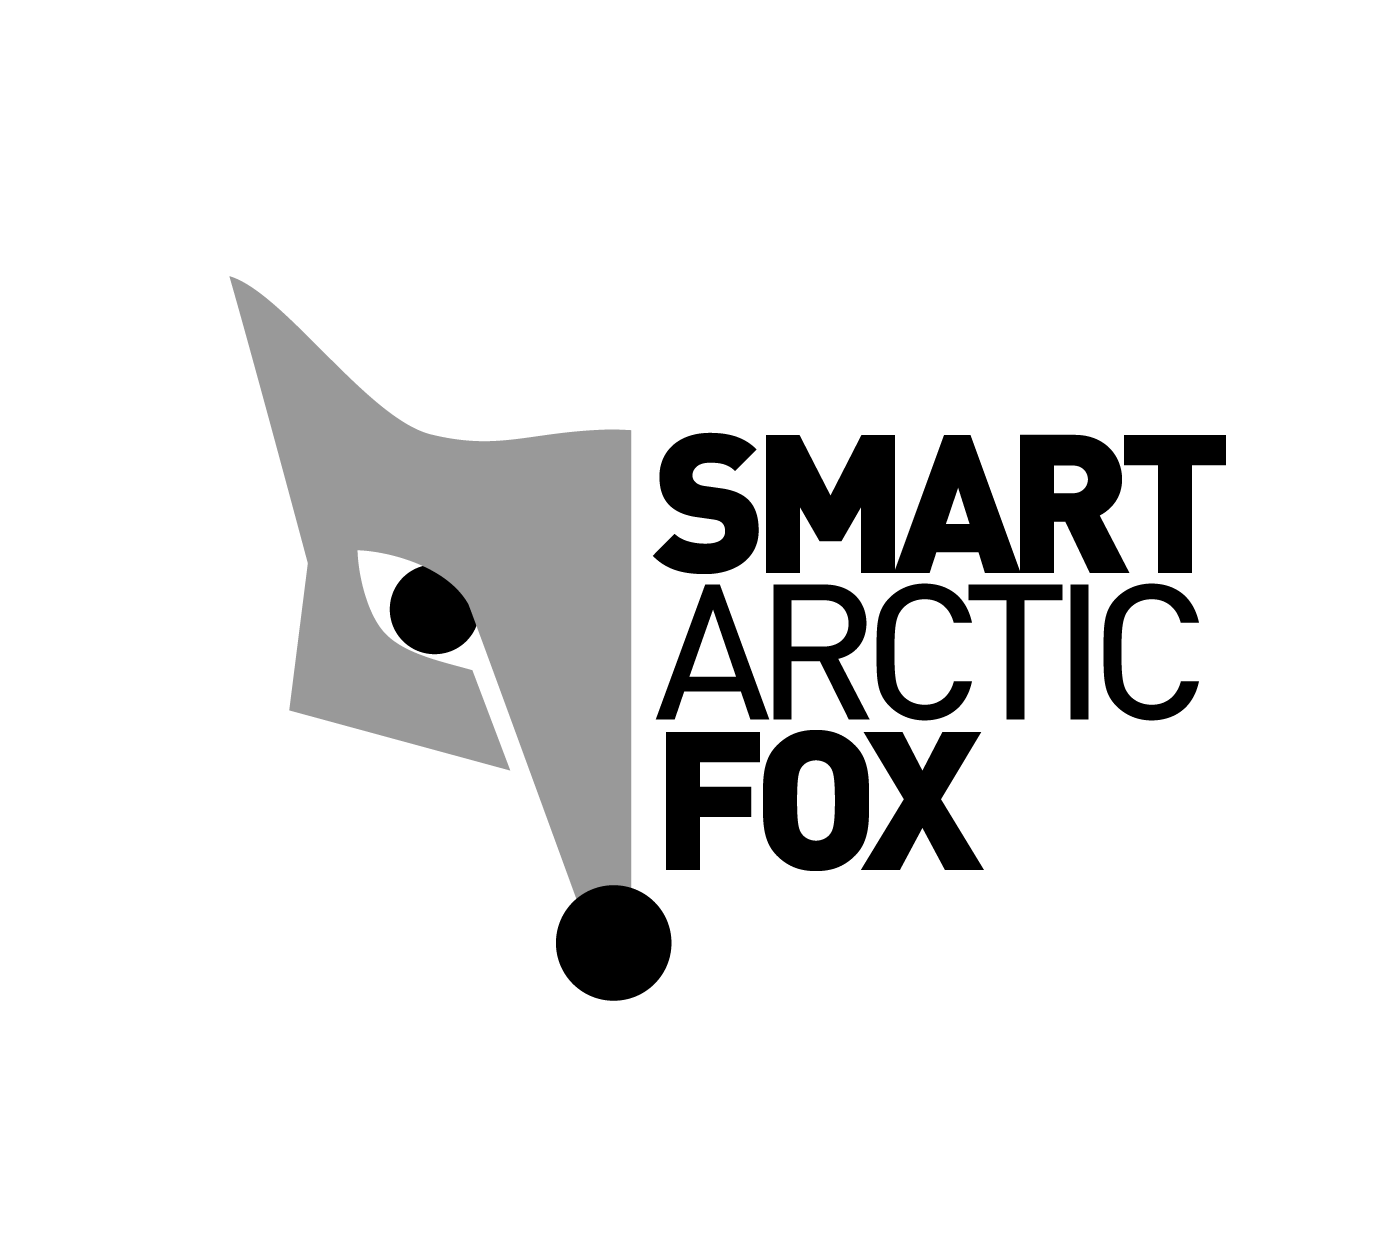 SMART ARCTIC FOX promo trailer